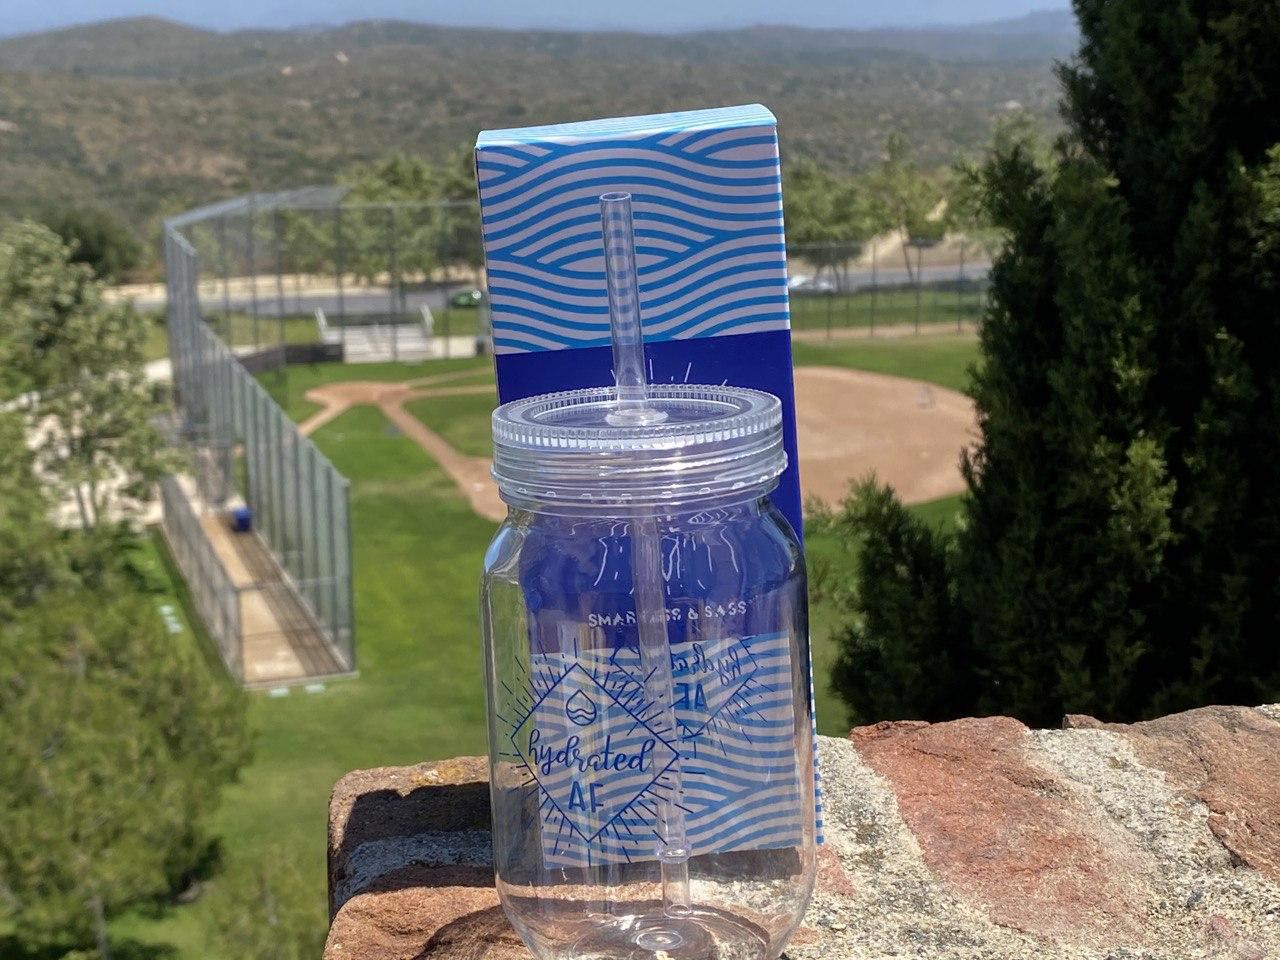 Smartass and Sass Hydrated AF plastic mason jar